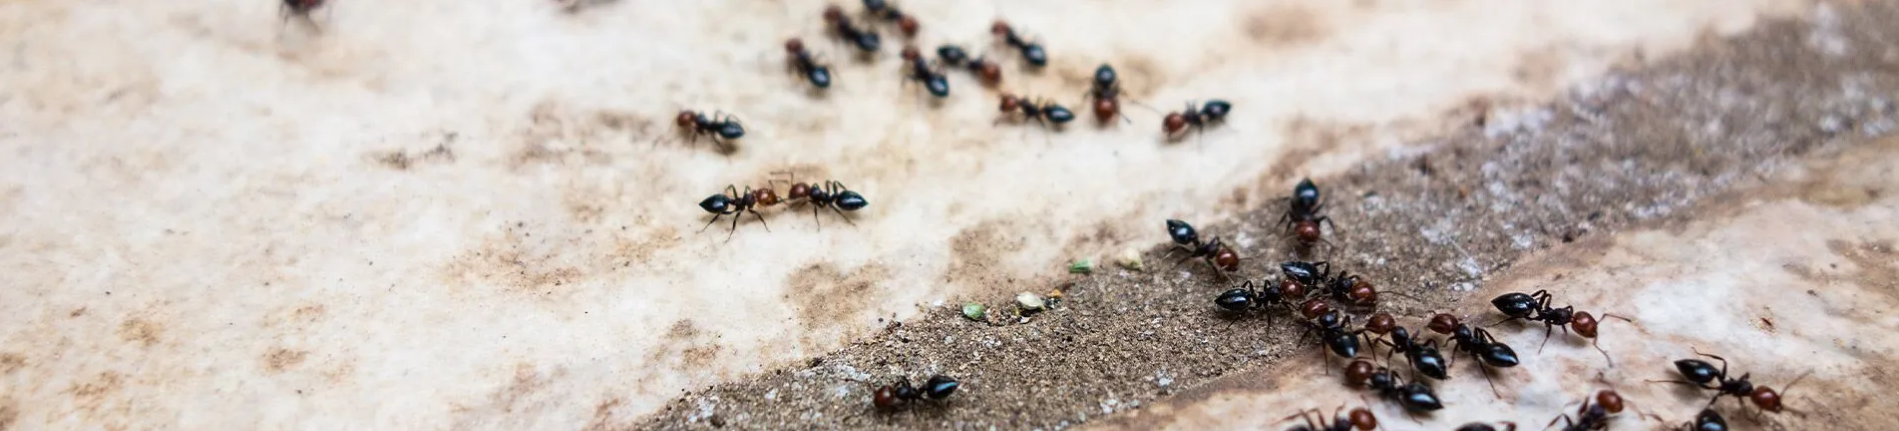 Ant poison Birmingham Alabama